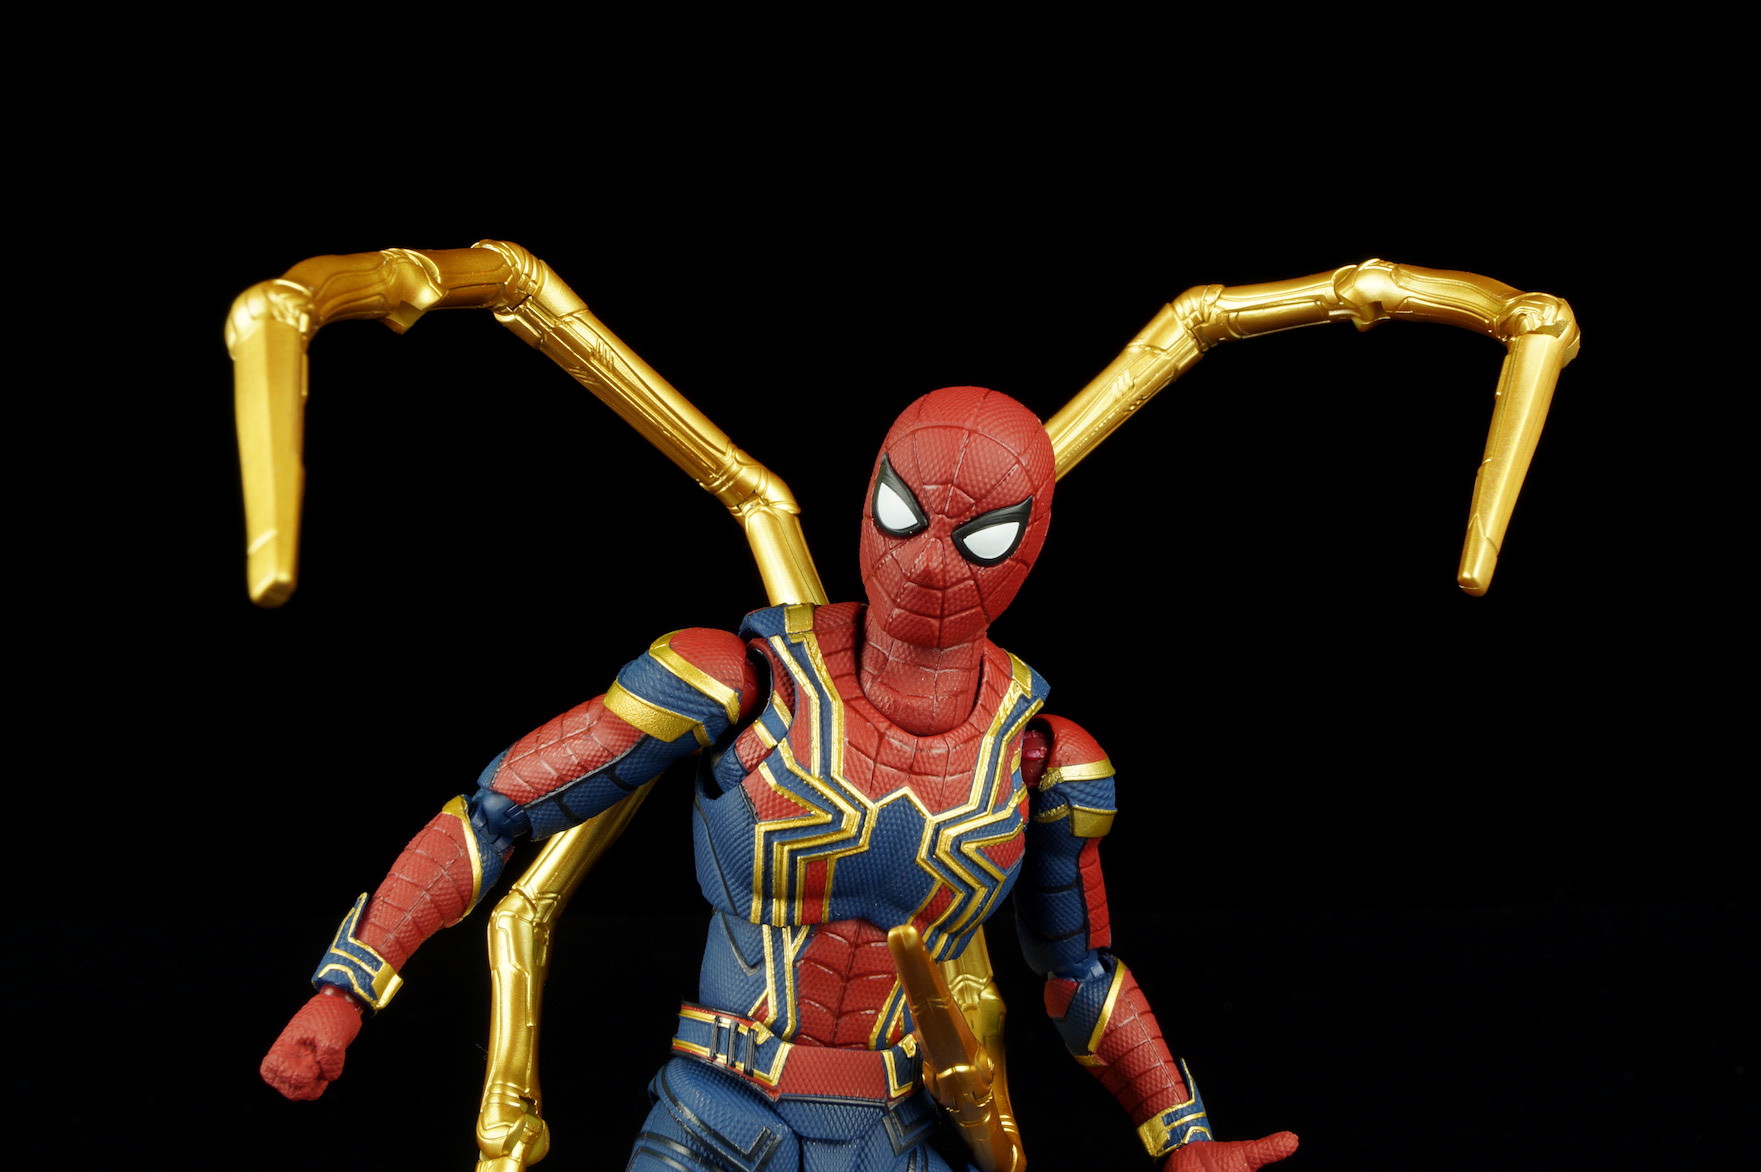 S.H.Figuarts Marvel Avengers Infinity War Iron Spider Spider-Man Action Figure 